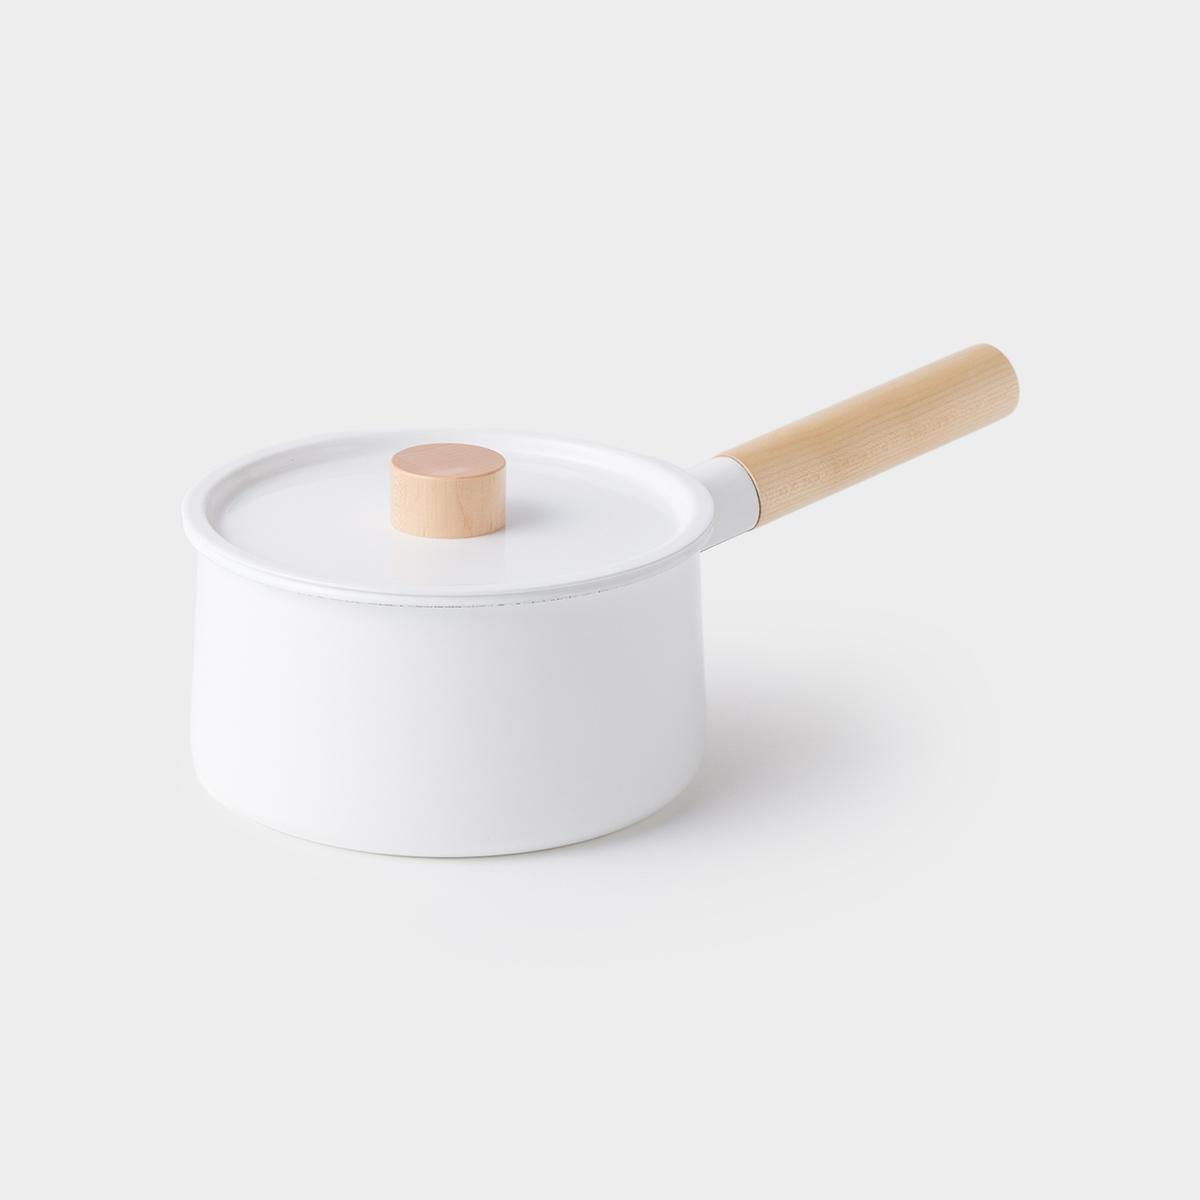 【kaico】 片手鍋 琺瑯 ホワイト 18cm